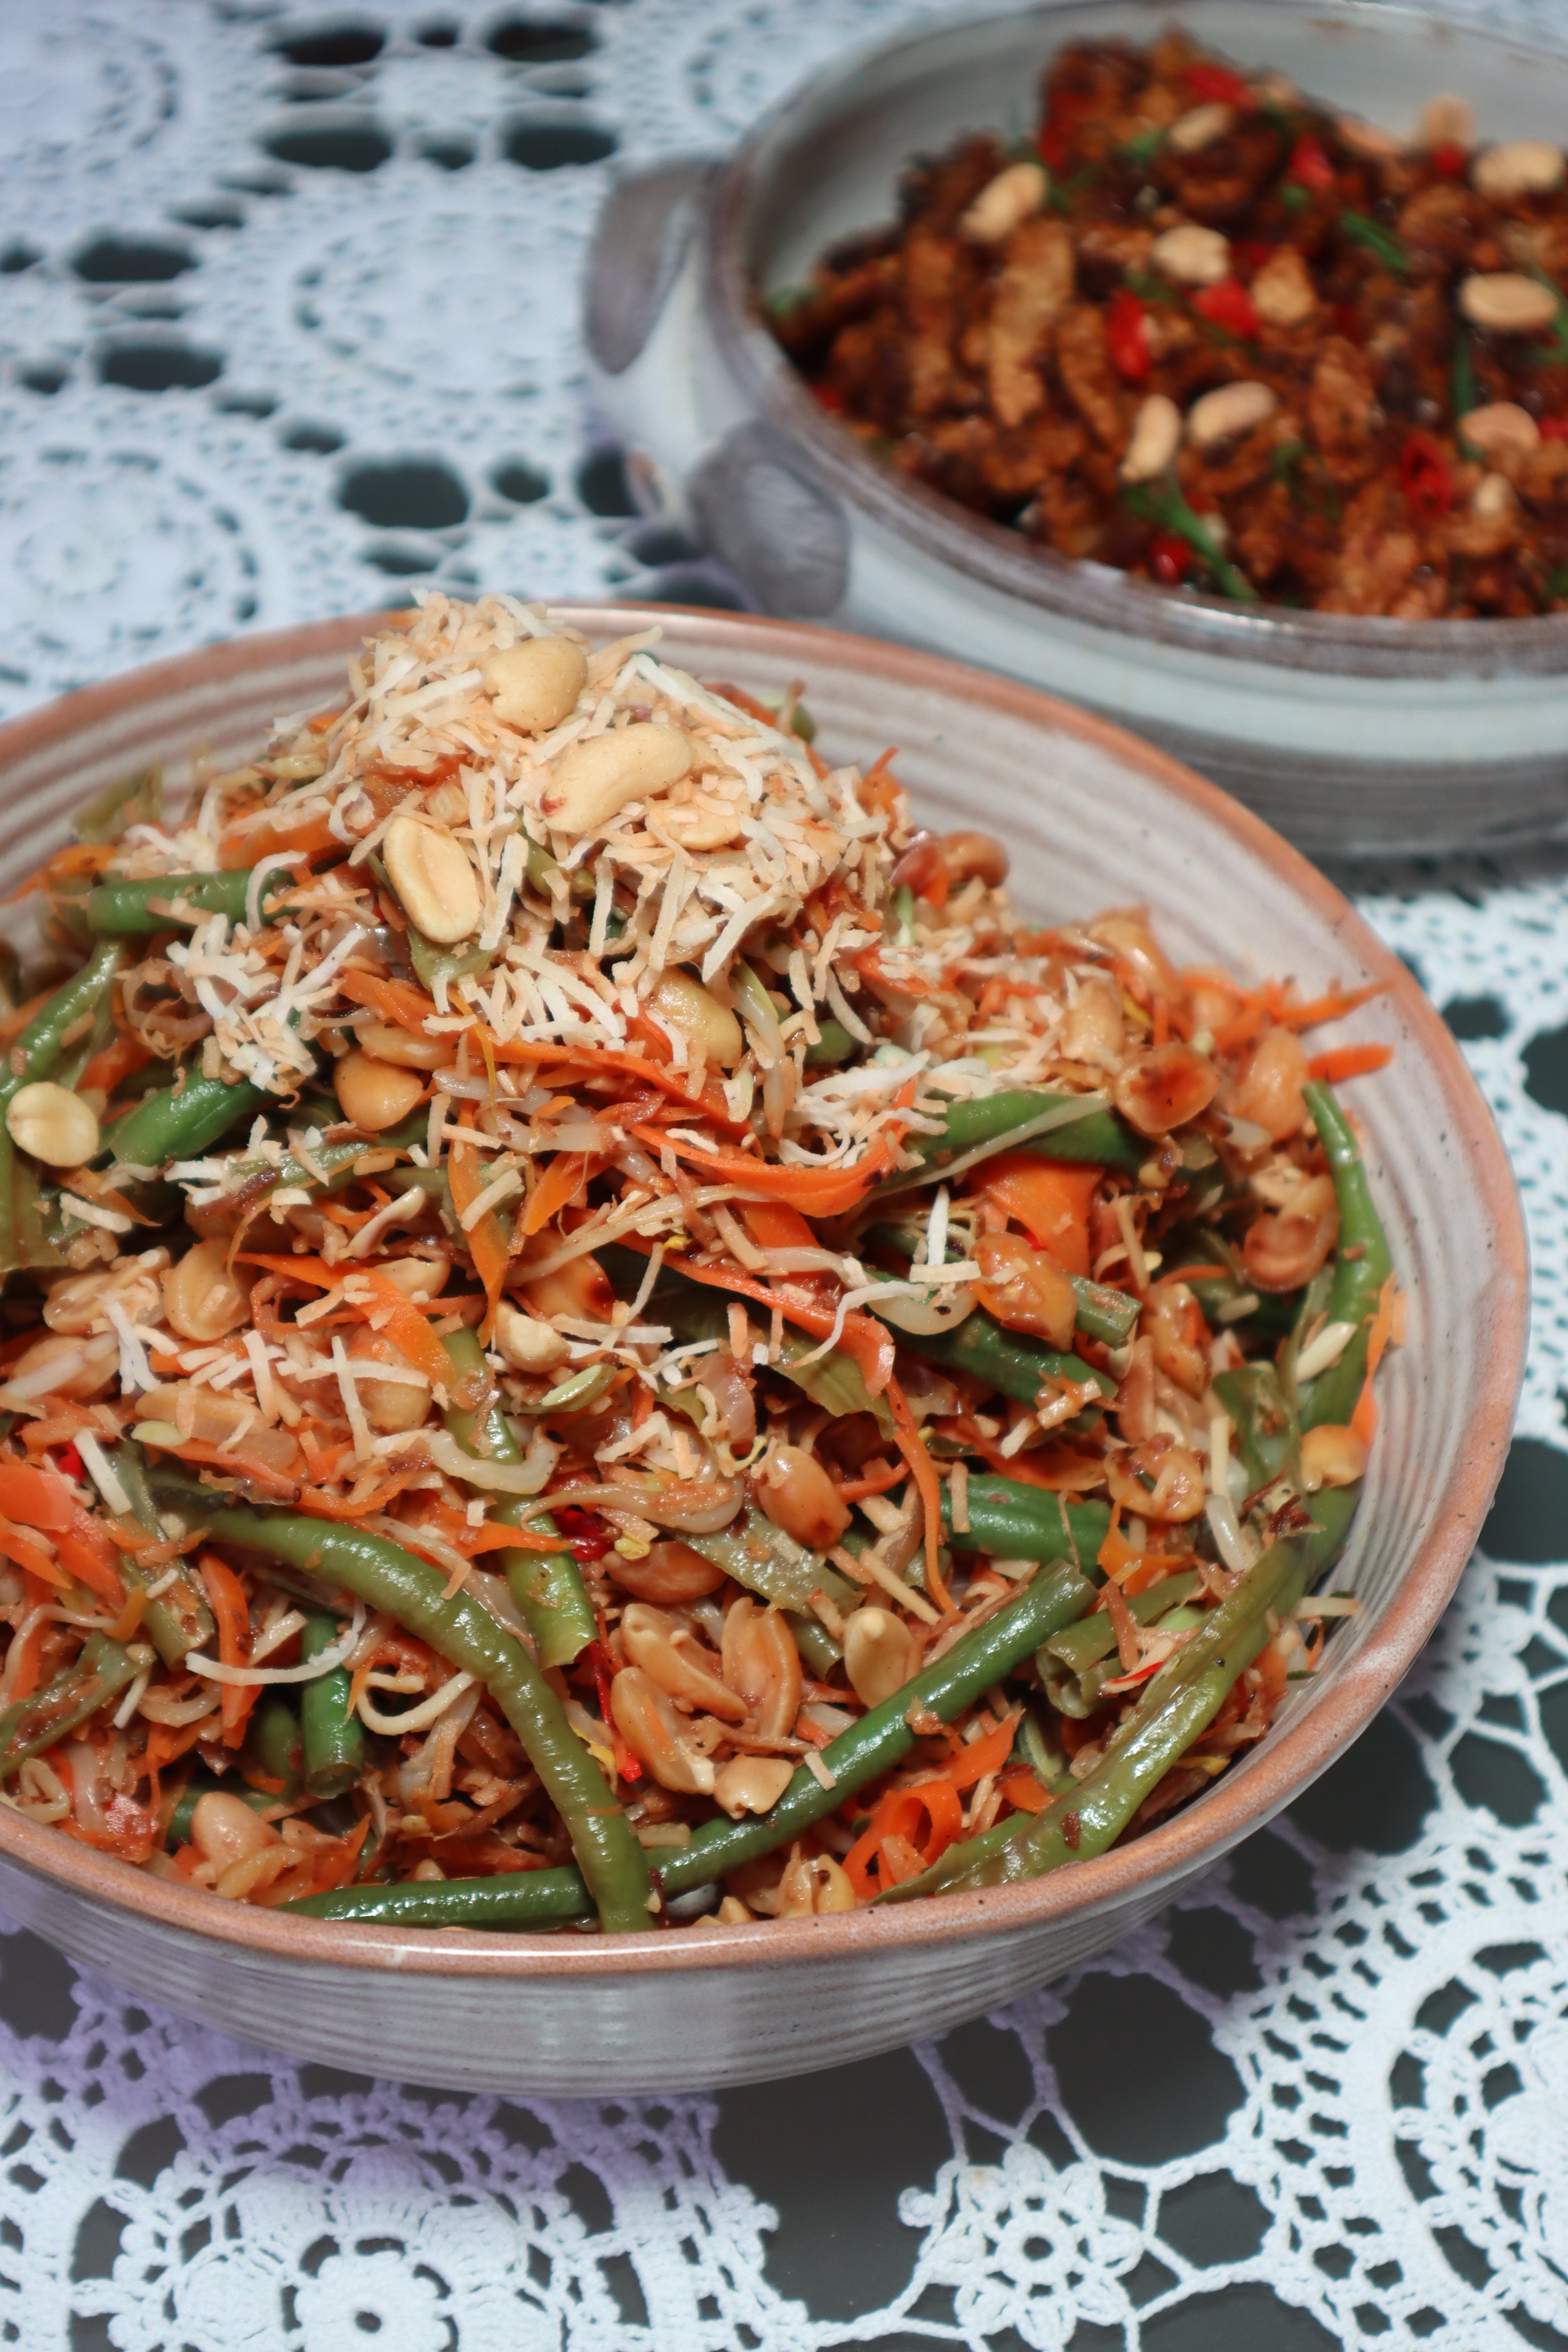 Urap Sayur (Indonesian Blanched Vegetable Salad)